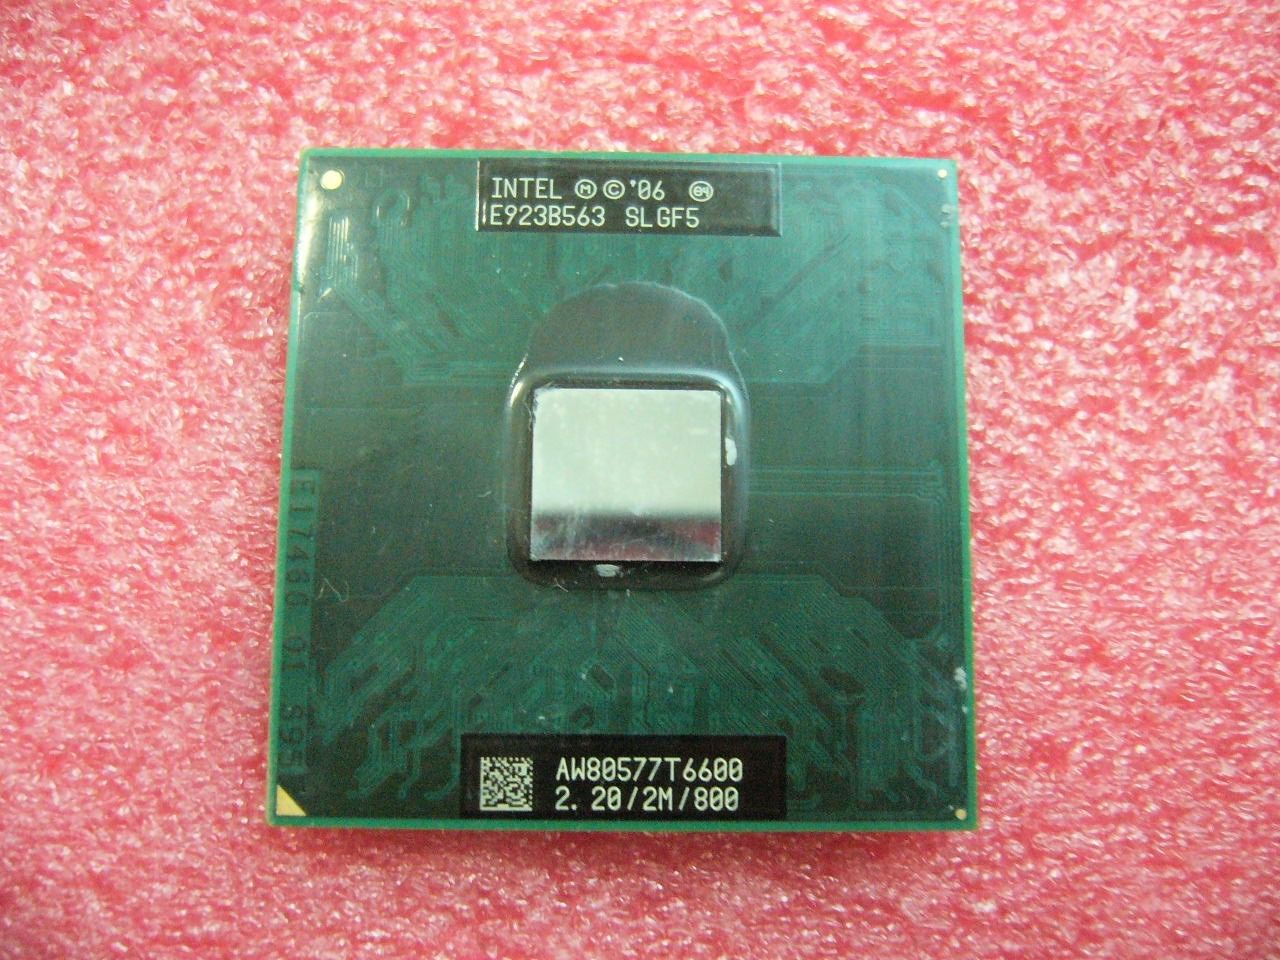 QTY 1x INTEL Core 2 Duo T6600 2.2 GHz/2M/800Mhz Processor for Laptop SLGF5